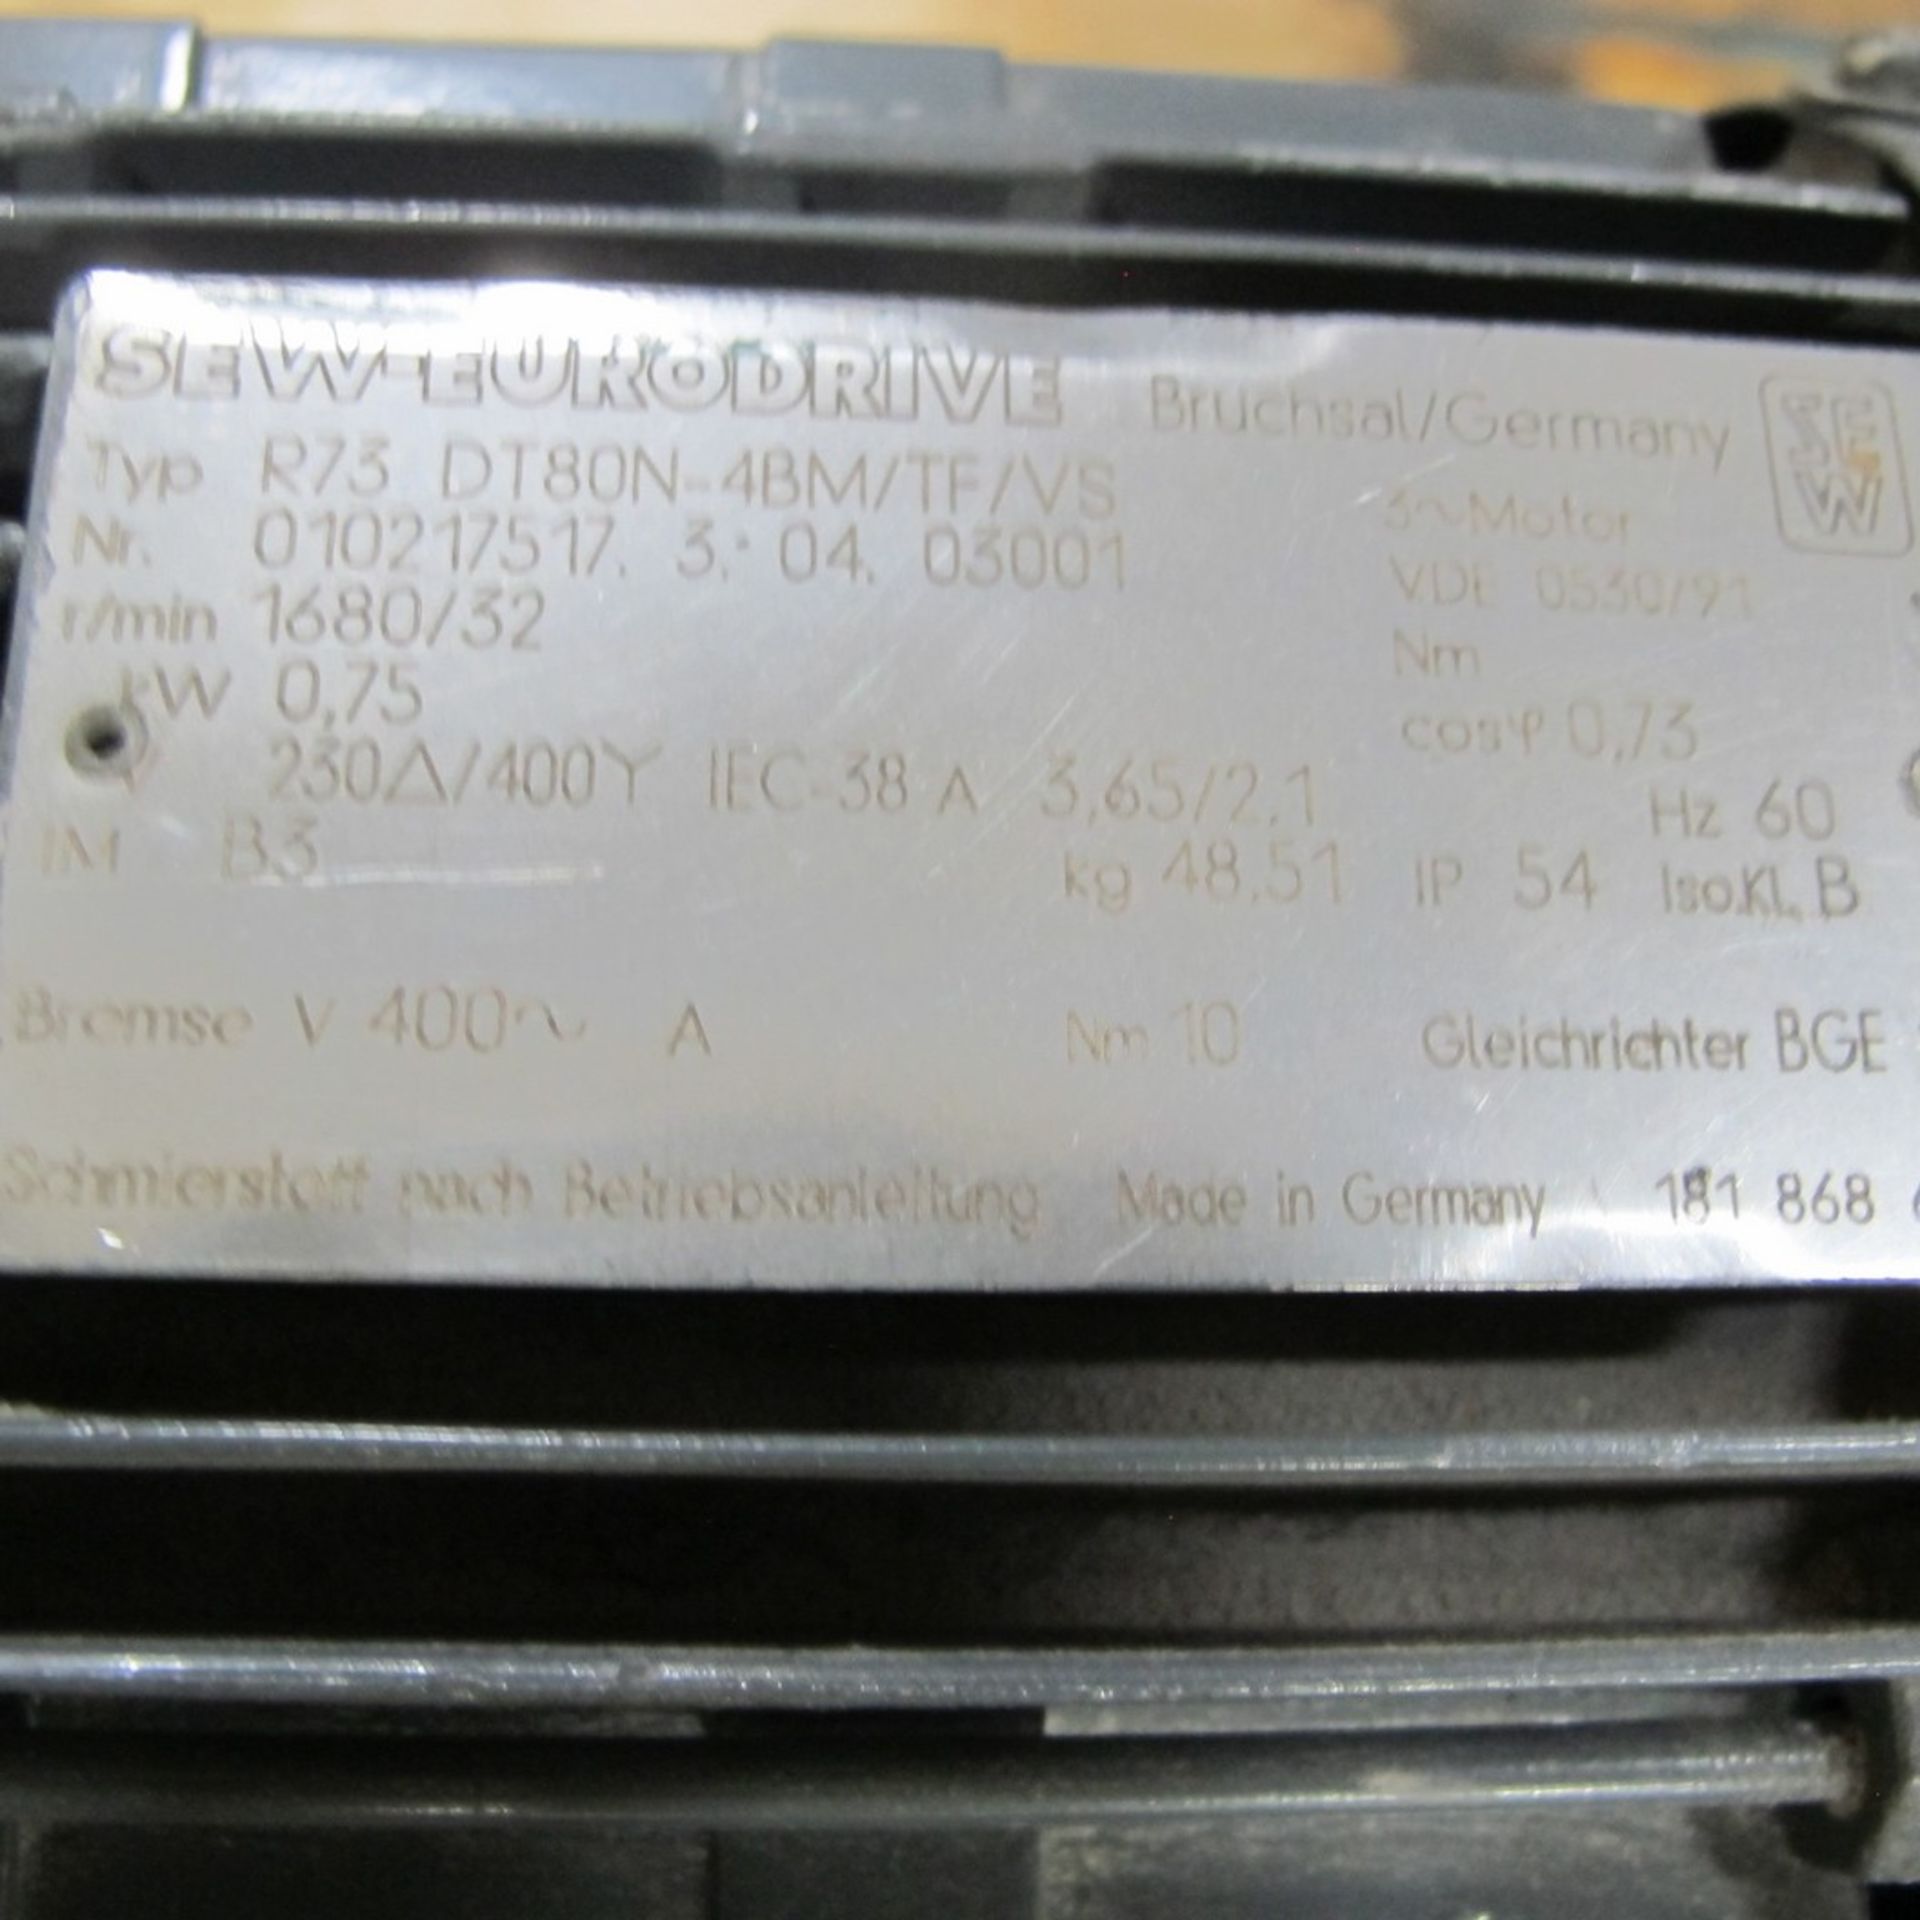 SEW EURODRIVE SERVO MOTOR R75DT80N-4BM/TF/VS, 0.75KW, 1,680/32 RPM W/ GEARBOX/REDUCER (NORTHWEST - Image 2 of 3